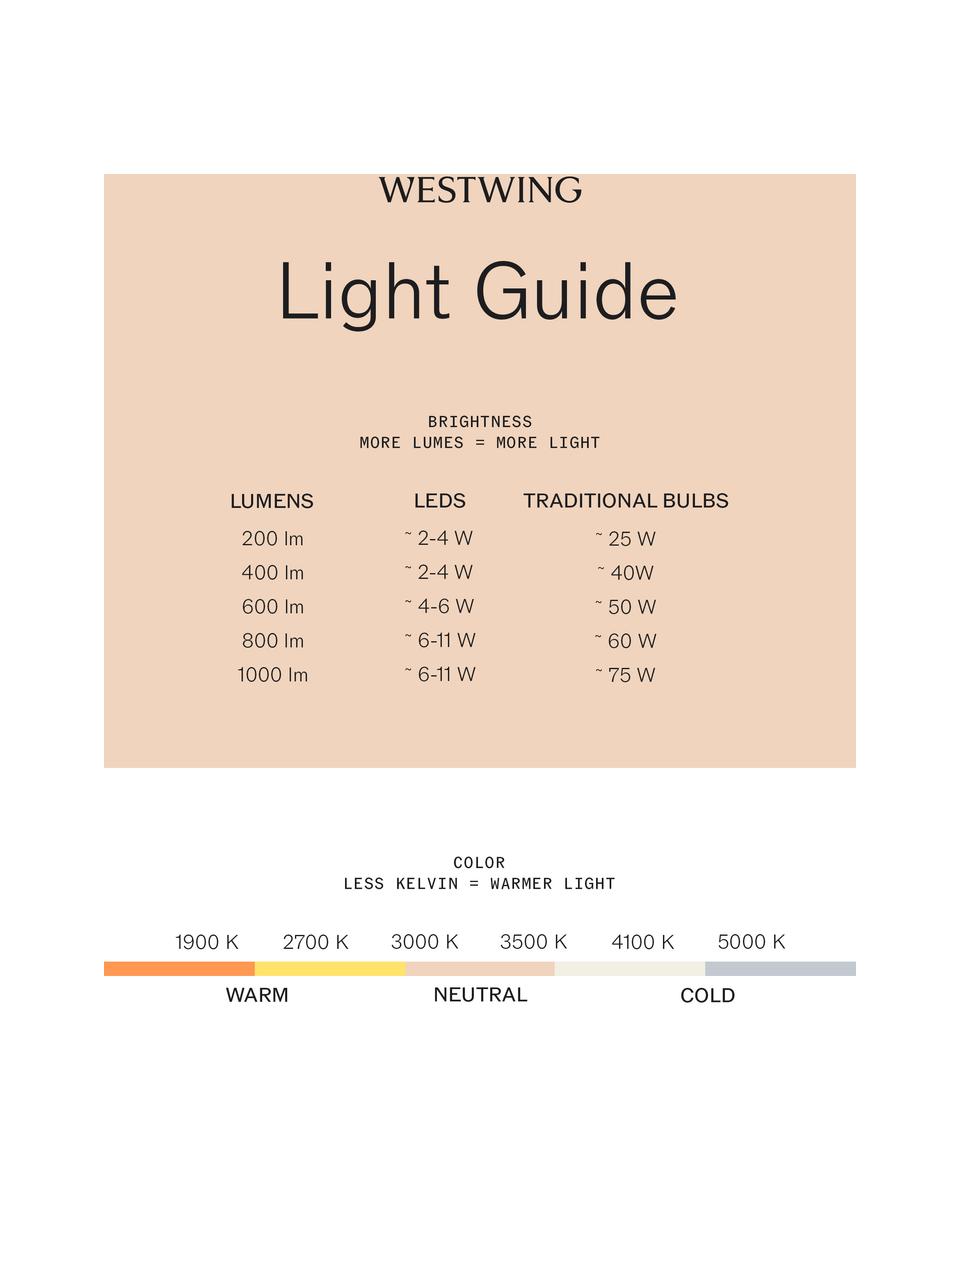 Grote LED vloerlamp Kyudo, dimbaar, Wit, H 212 cm